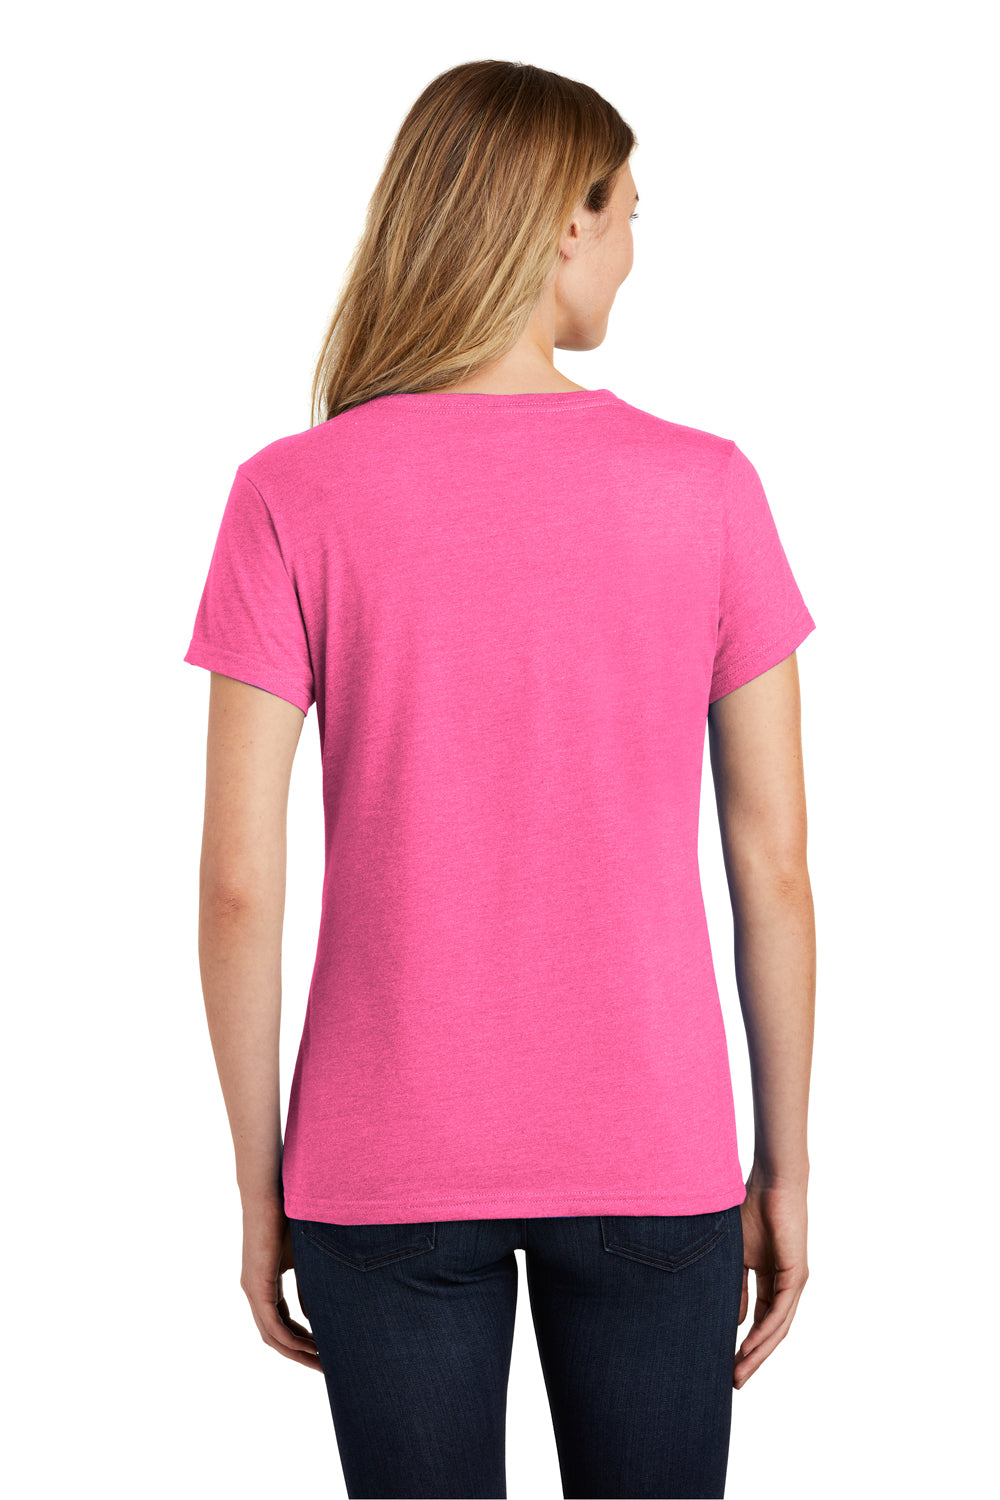 Port & Company LPC455V Womens Fan Favorite Short Sleeve V-Neck T-Shirt Heather Pink Back